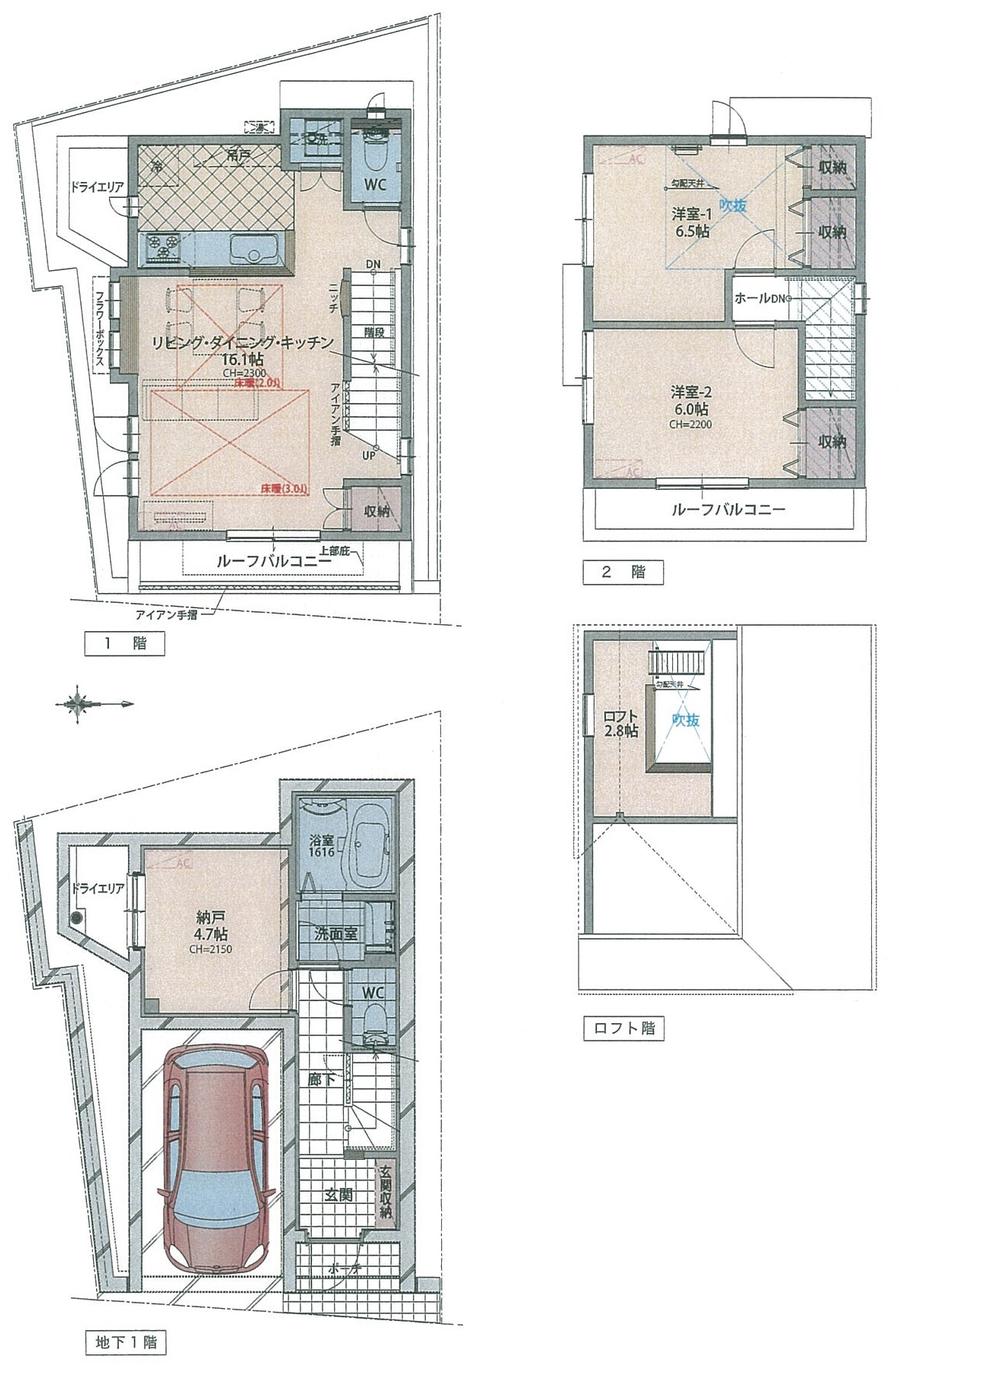 Floor plan. Price 69,800,000 yen, 2LDK+S, Land area 62.66 sq m , Building area 84.62 sq m